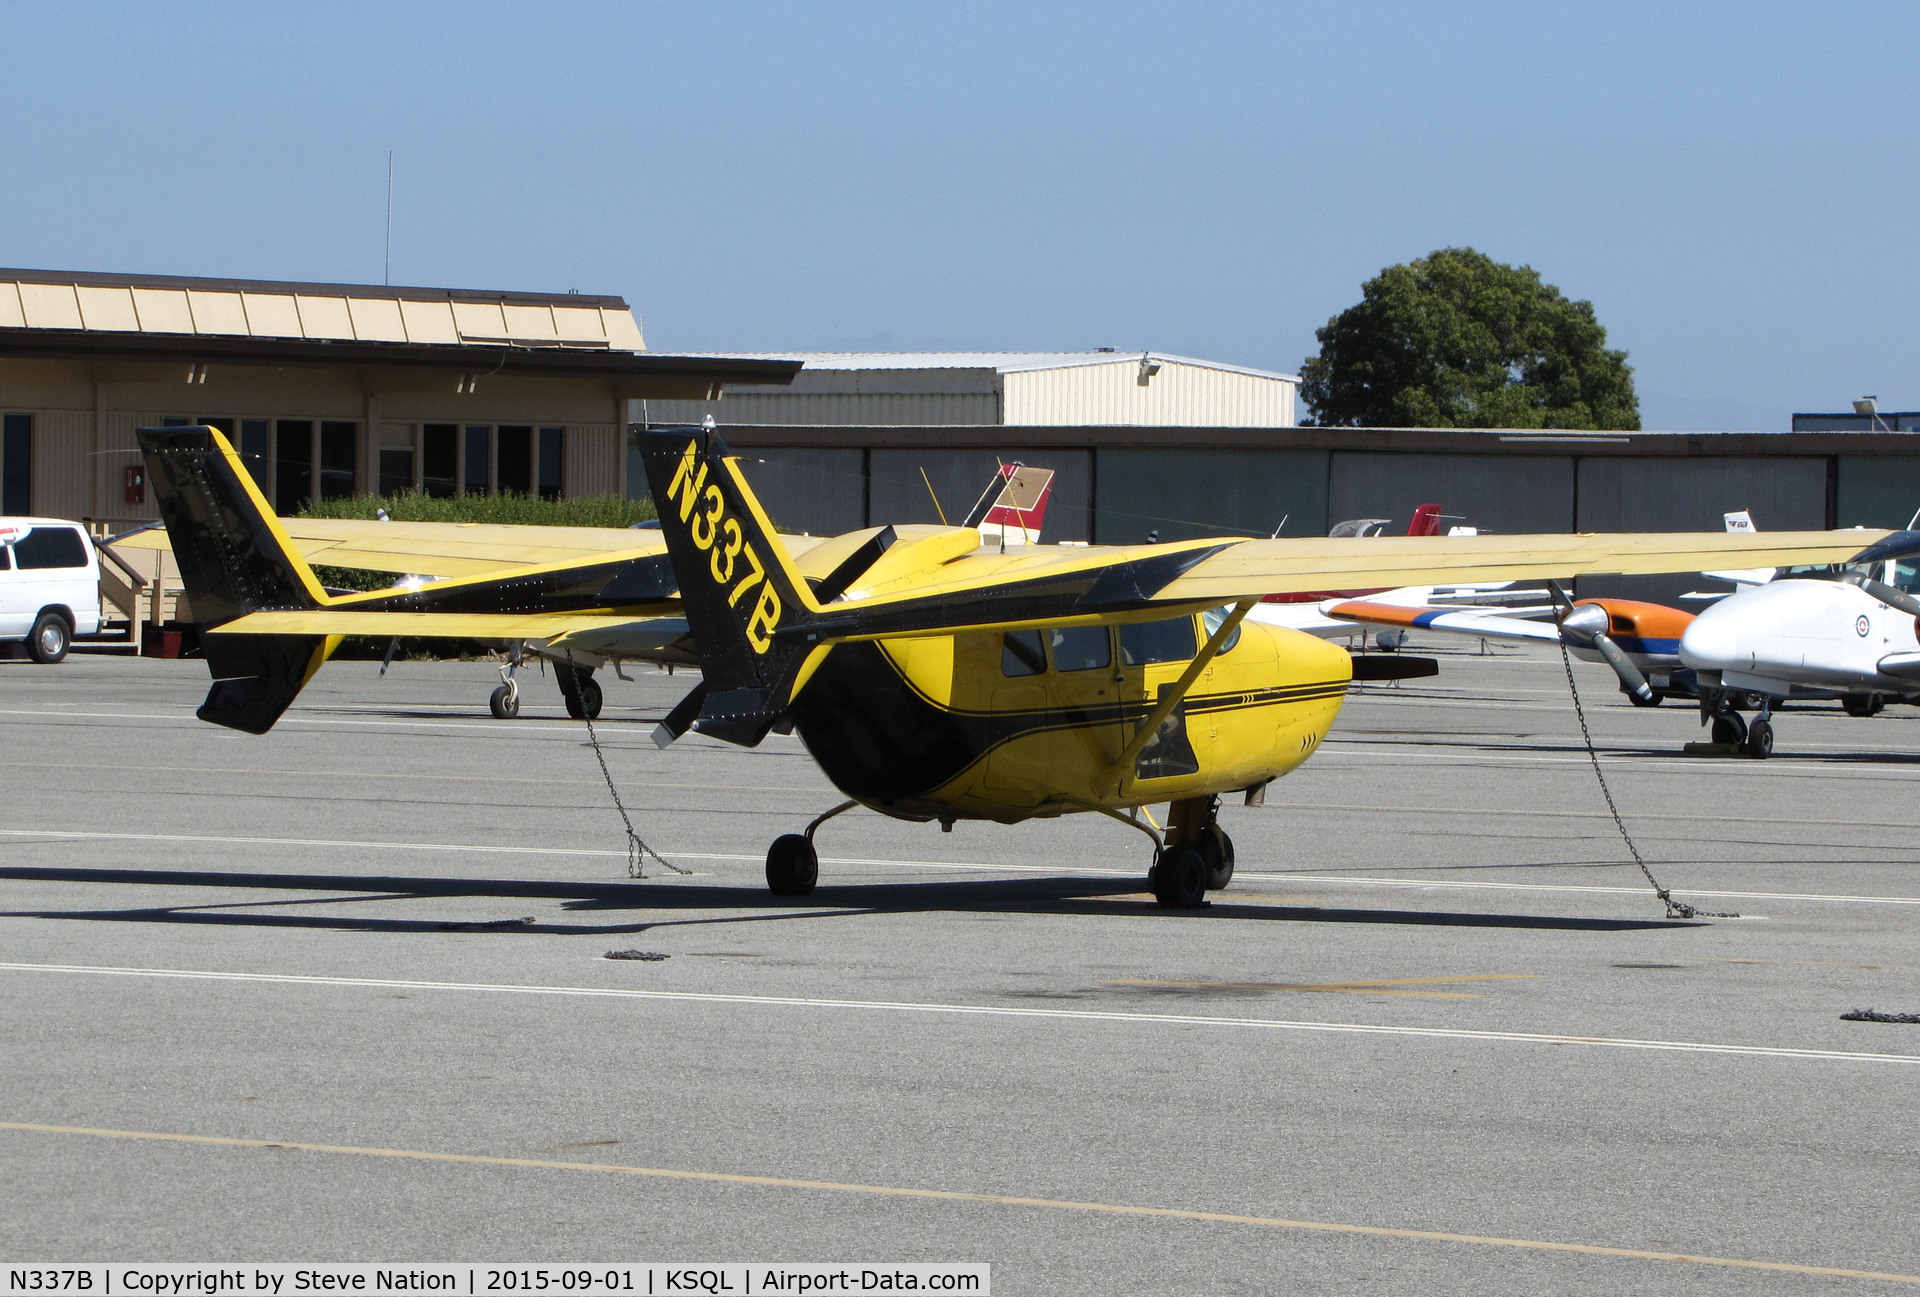 N337B, 1967 Cessna T337C Turbo Super Skymaster C/N 337-0775, Colorful 1967 Cessna &337C from Laughlin, NV @ San Carlos Airport, CA